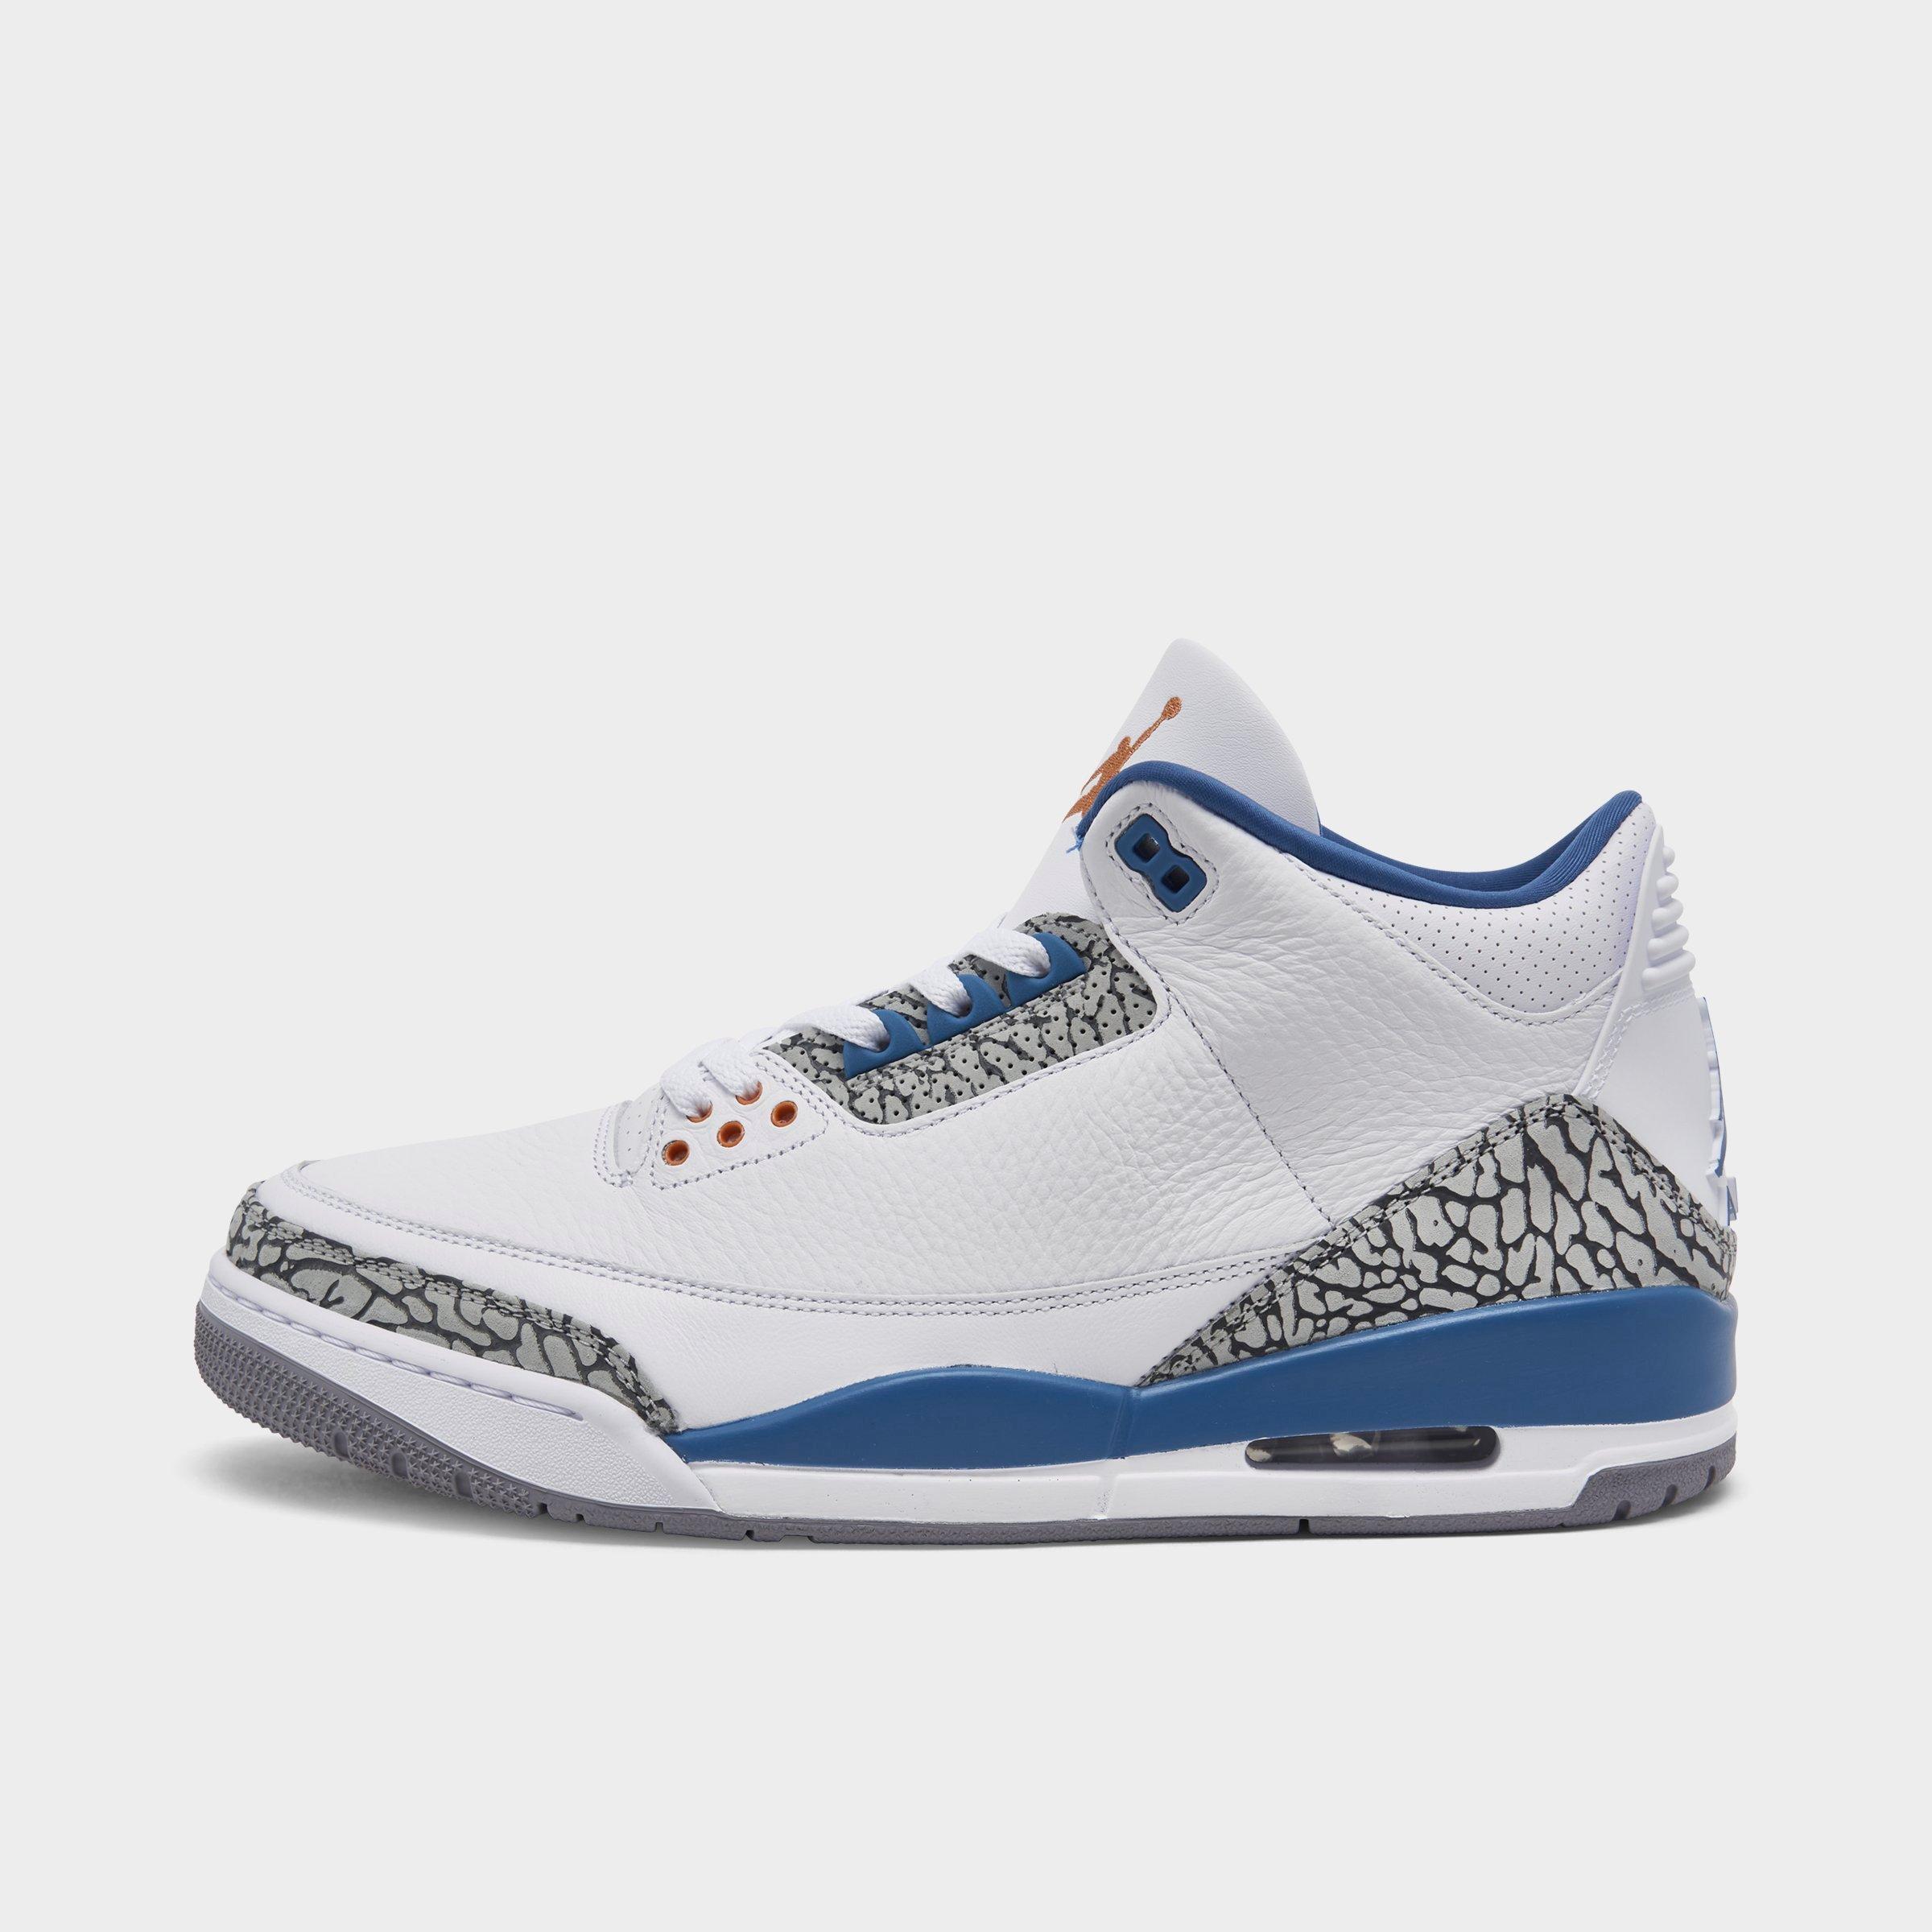 Nike Jordan Air Retro 3 Basketball Shoes In White/metallic Copper/true Blue/cement Grey